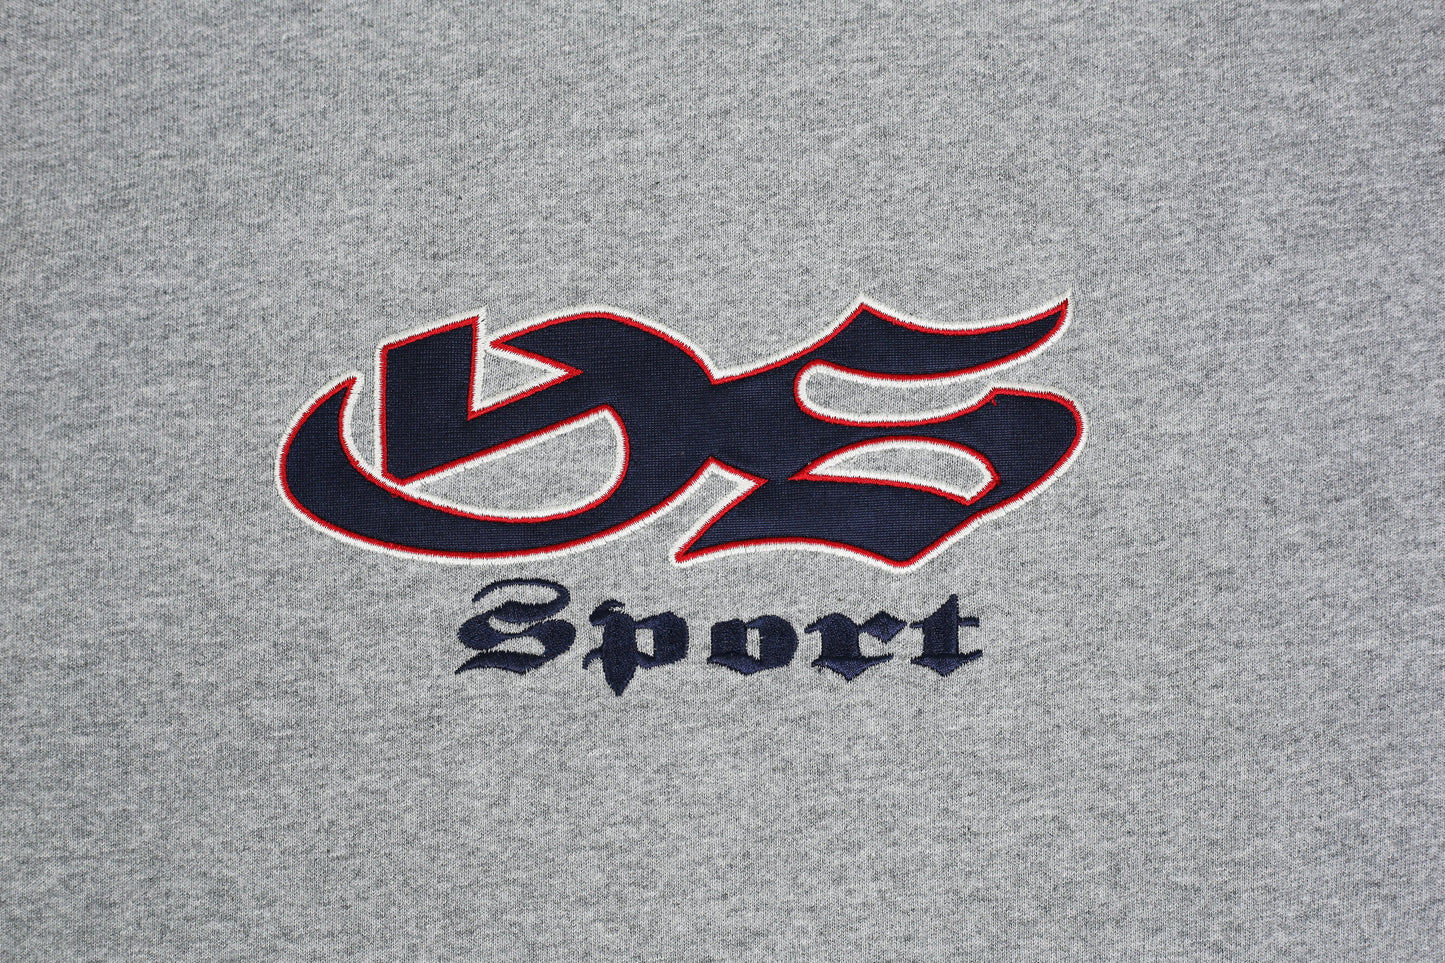 YS Sport Heavyweight T-Shirt (Grey)